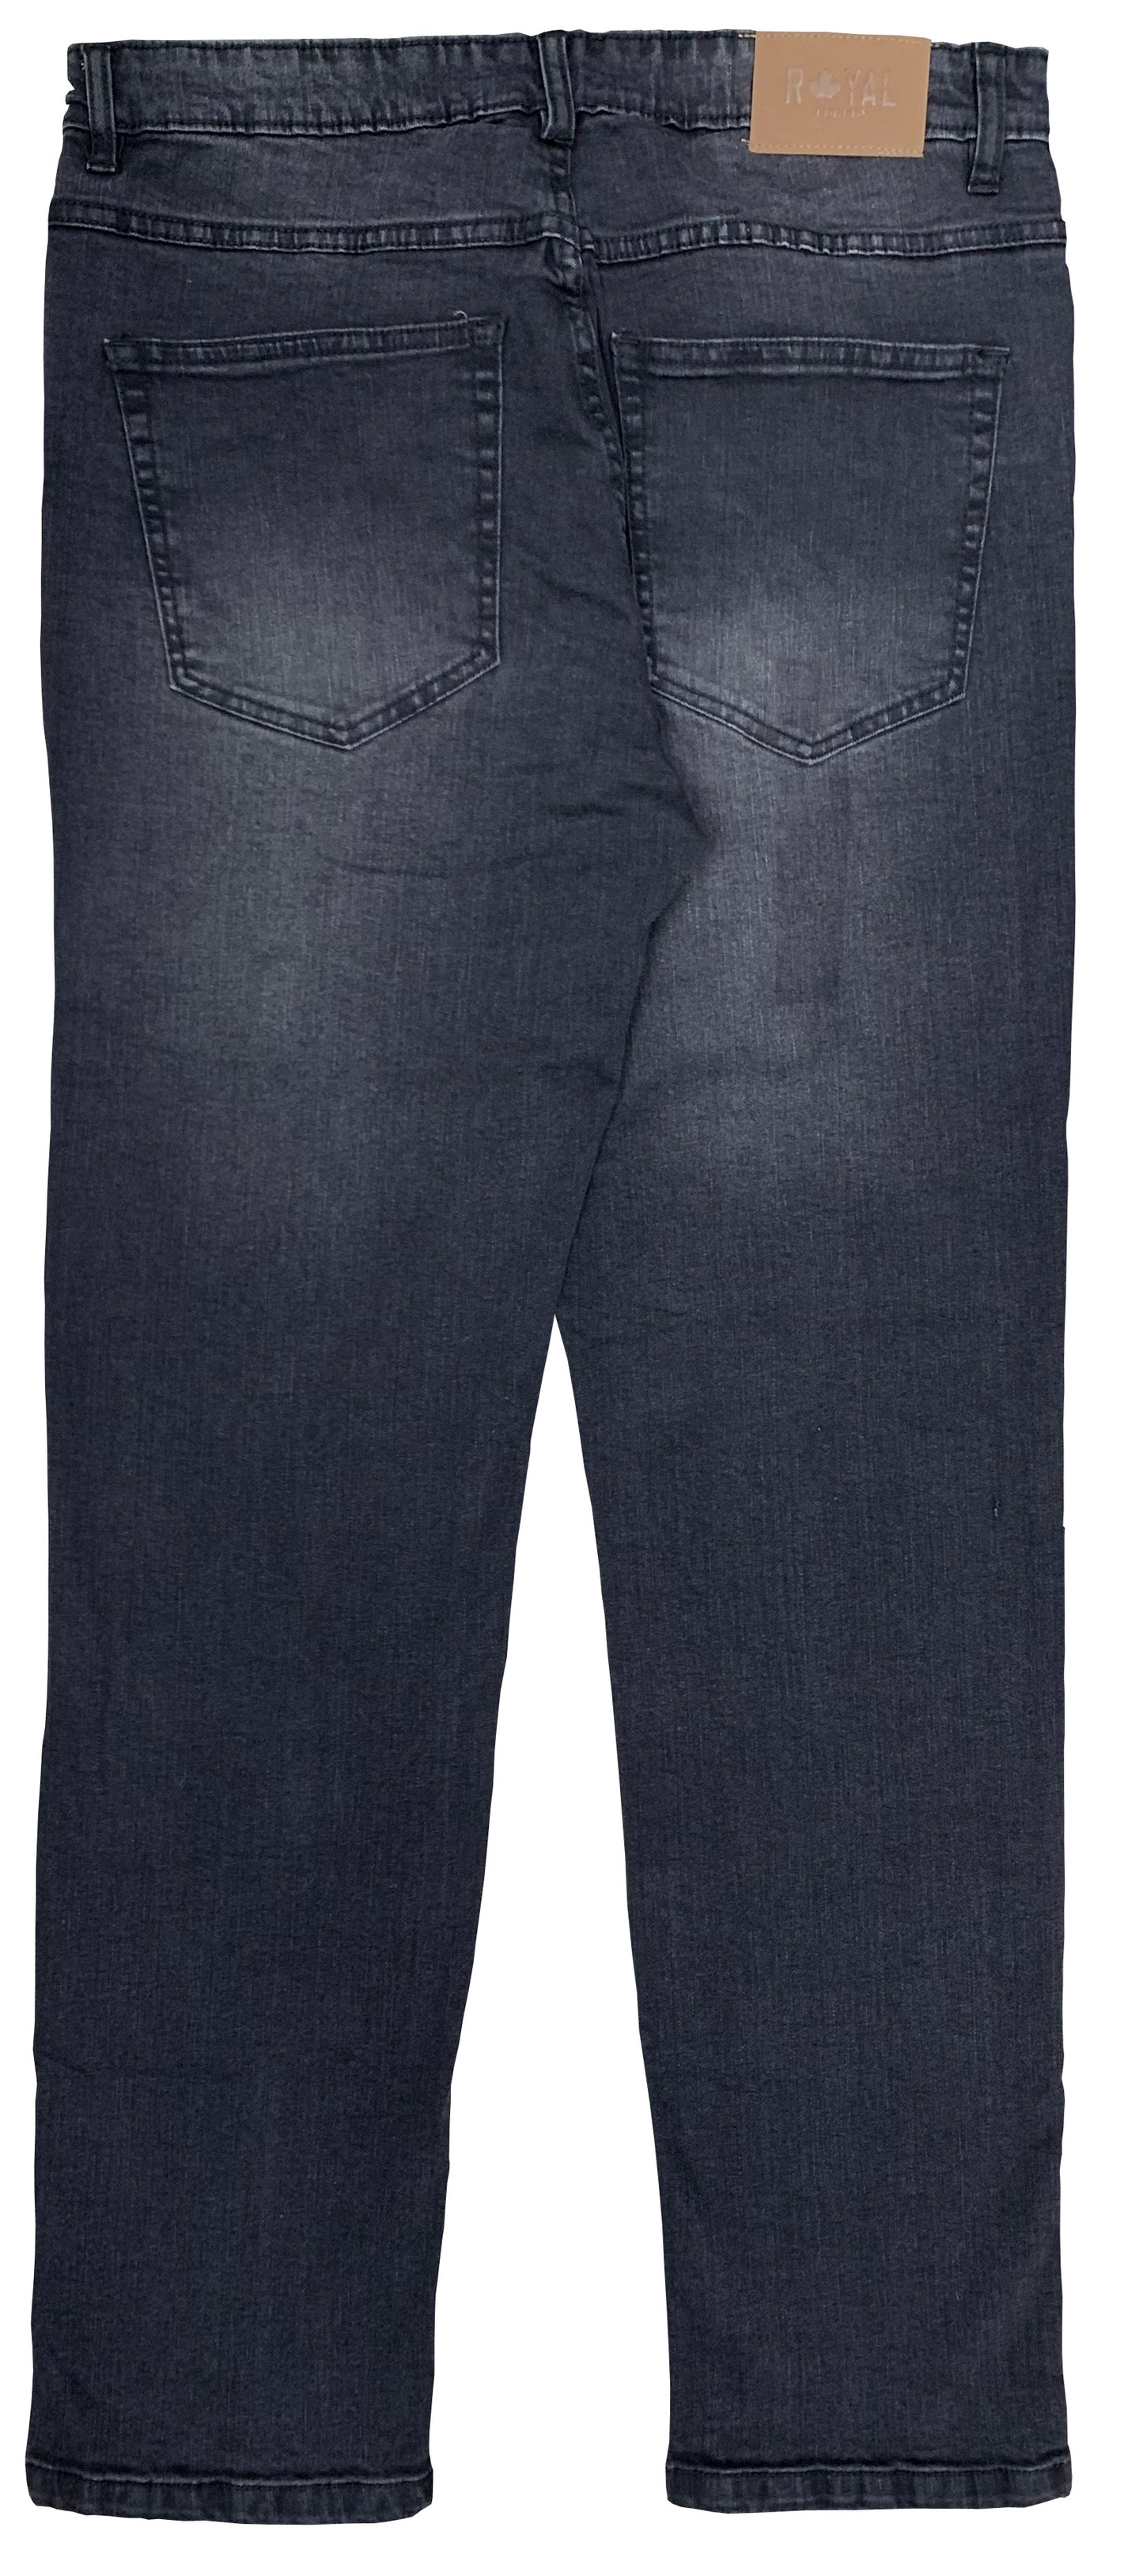 Men's Flex Straight cut Classic Denim Jeans